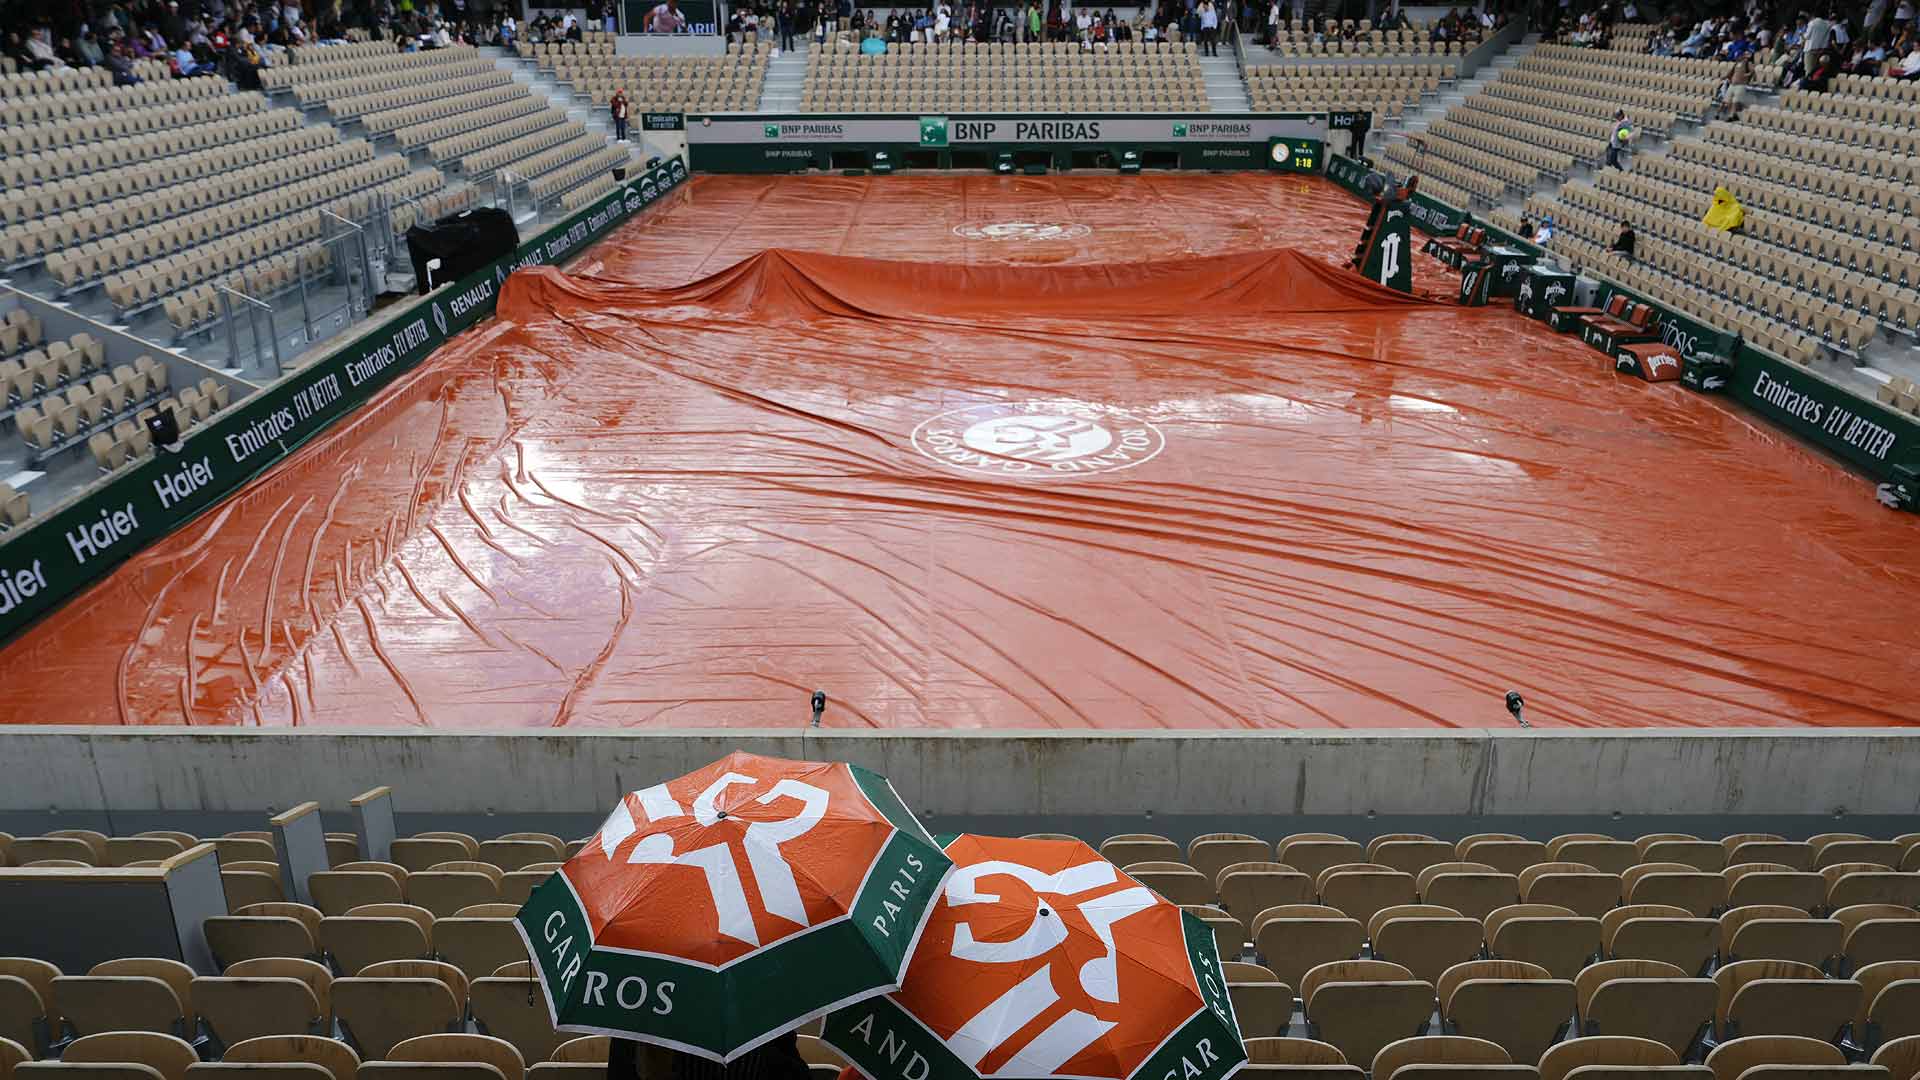 Rain delays start of Day 3 at Roland Garros ATP Tour Tennis